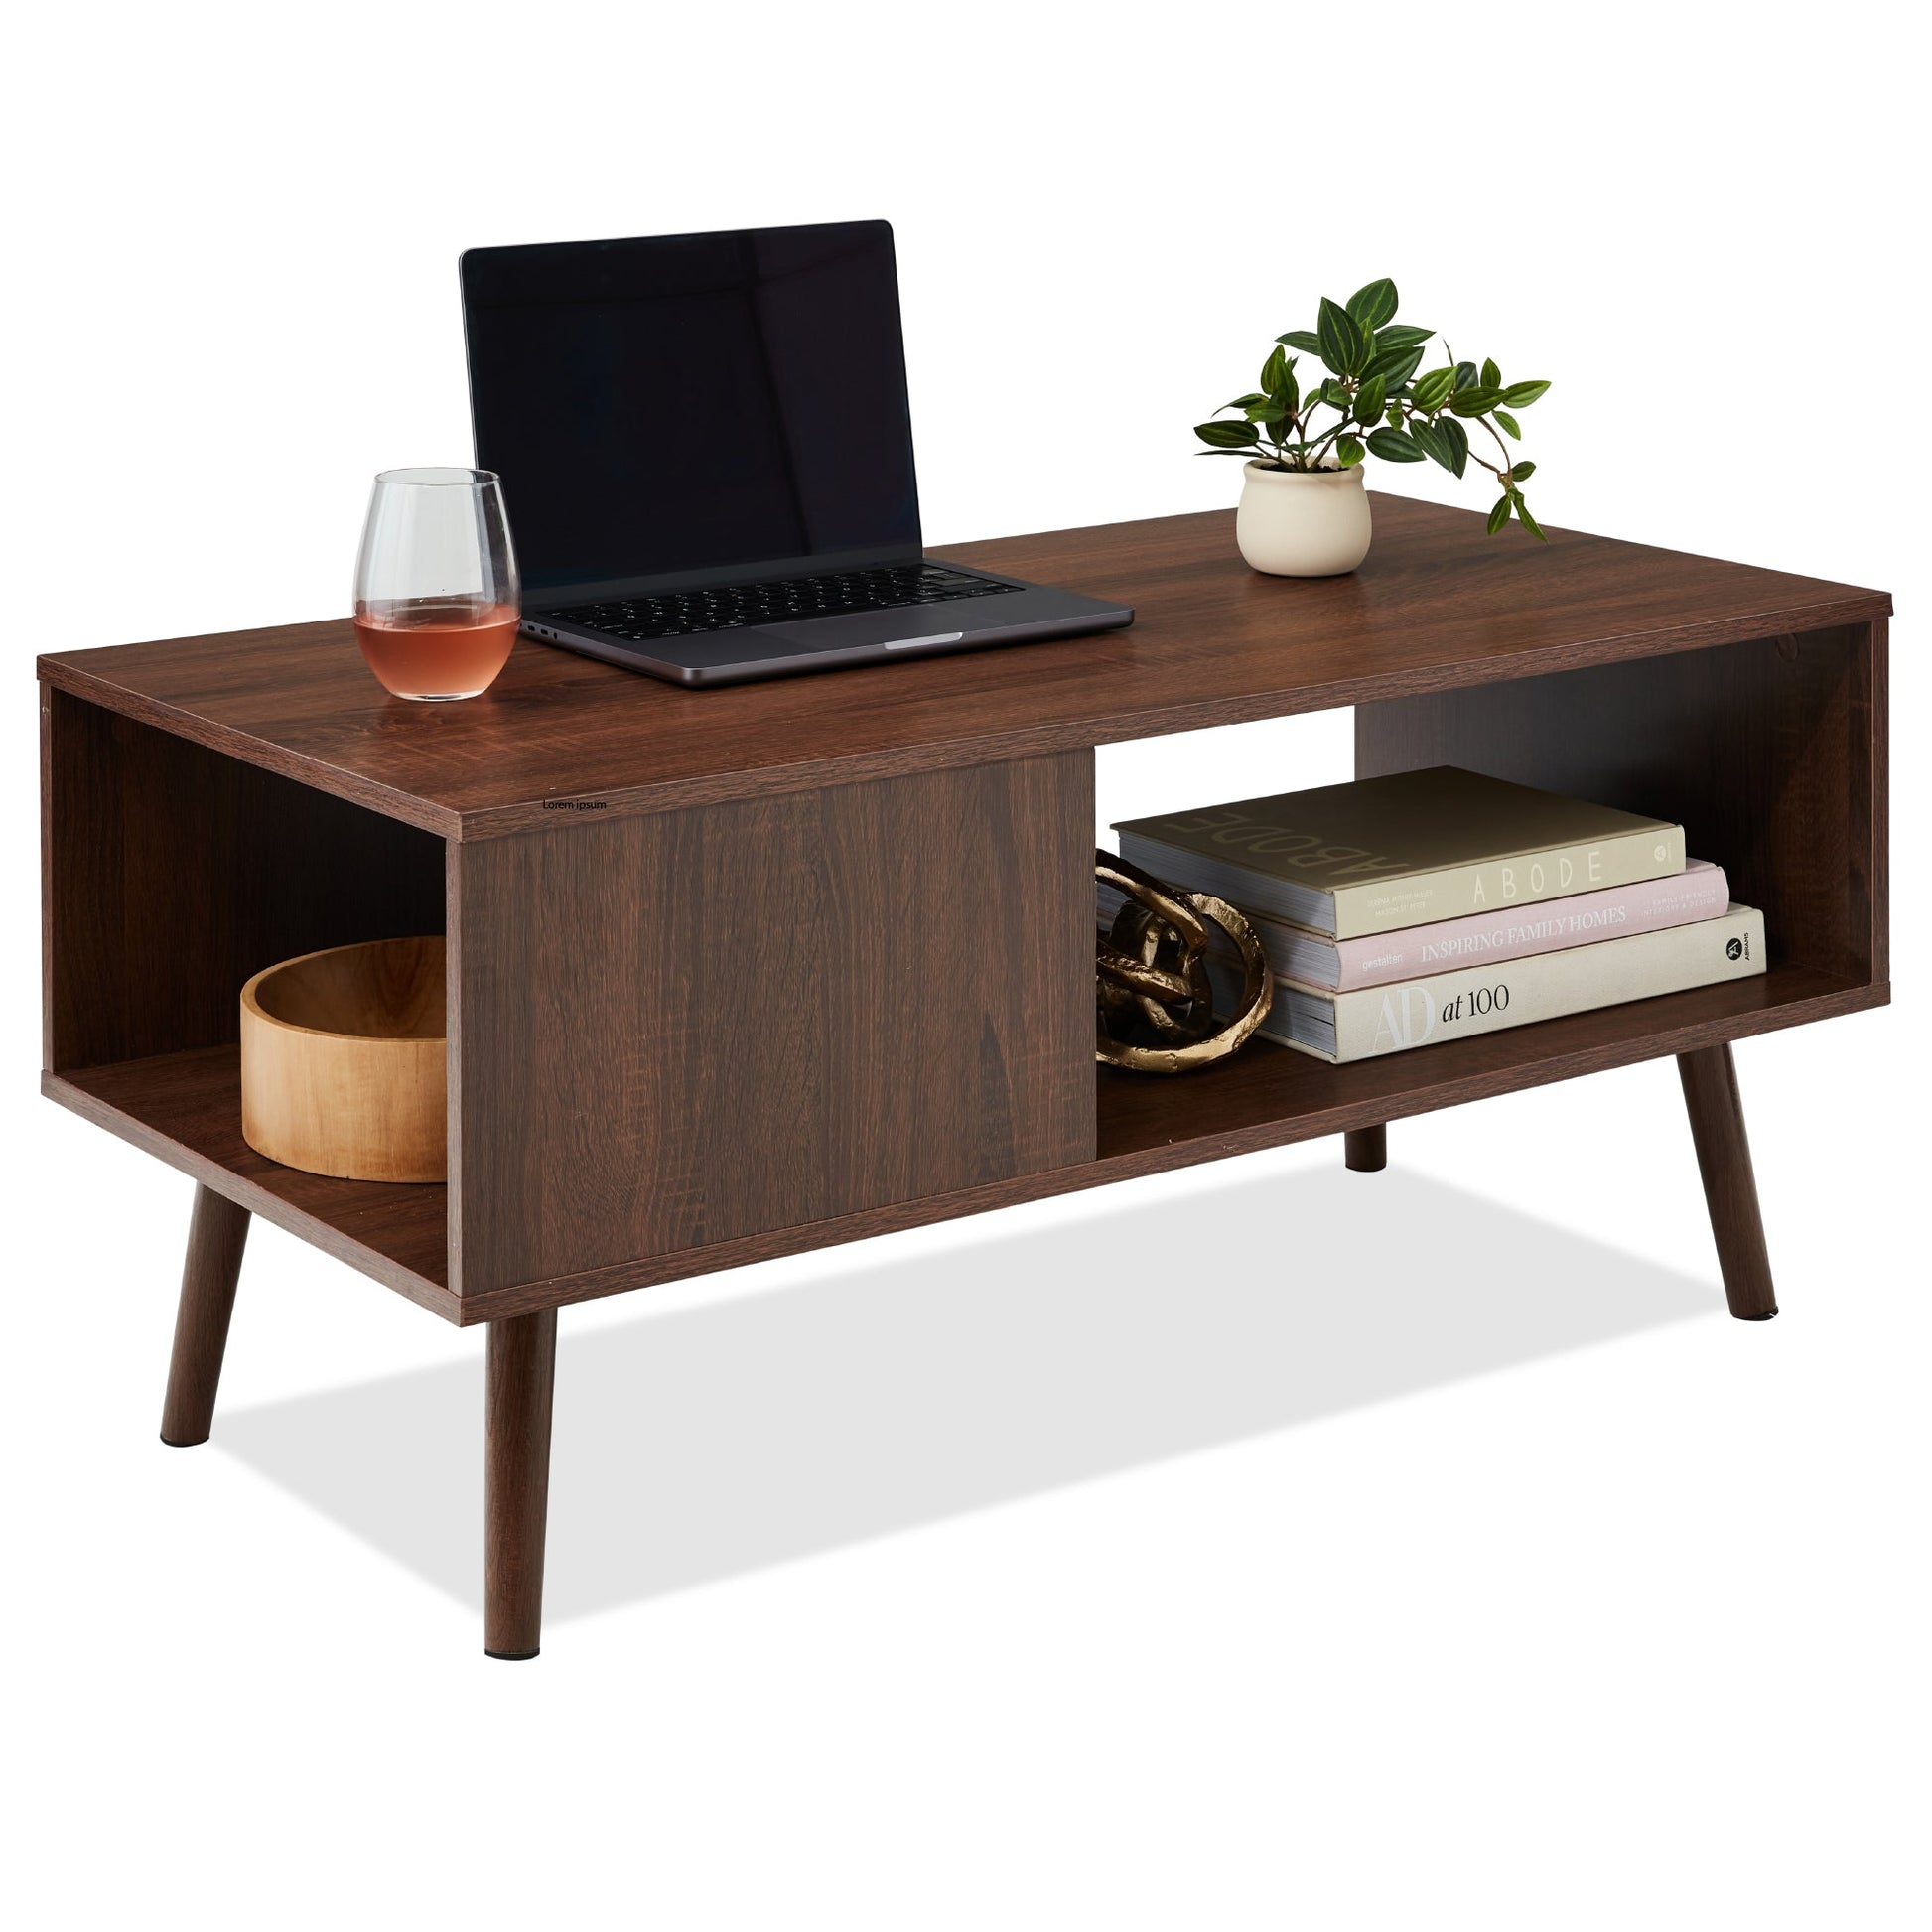 Wooden Mid-Century Modern Coffee Accent Table w/ Open Storage Shelf